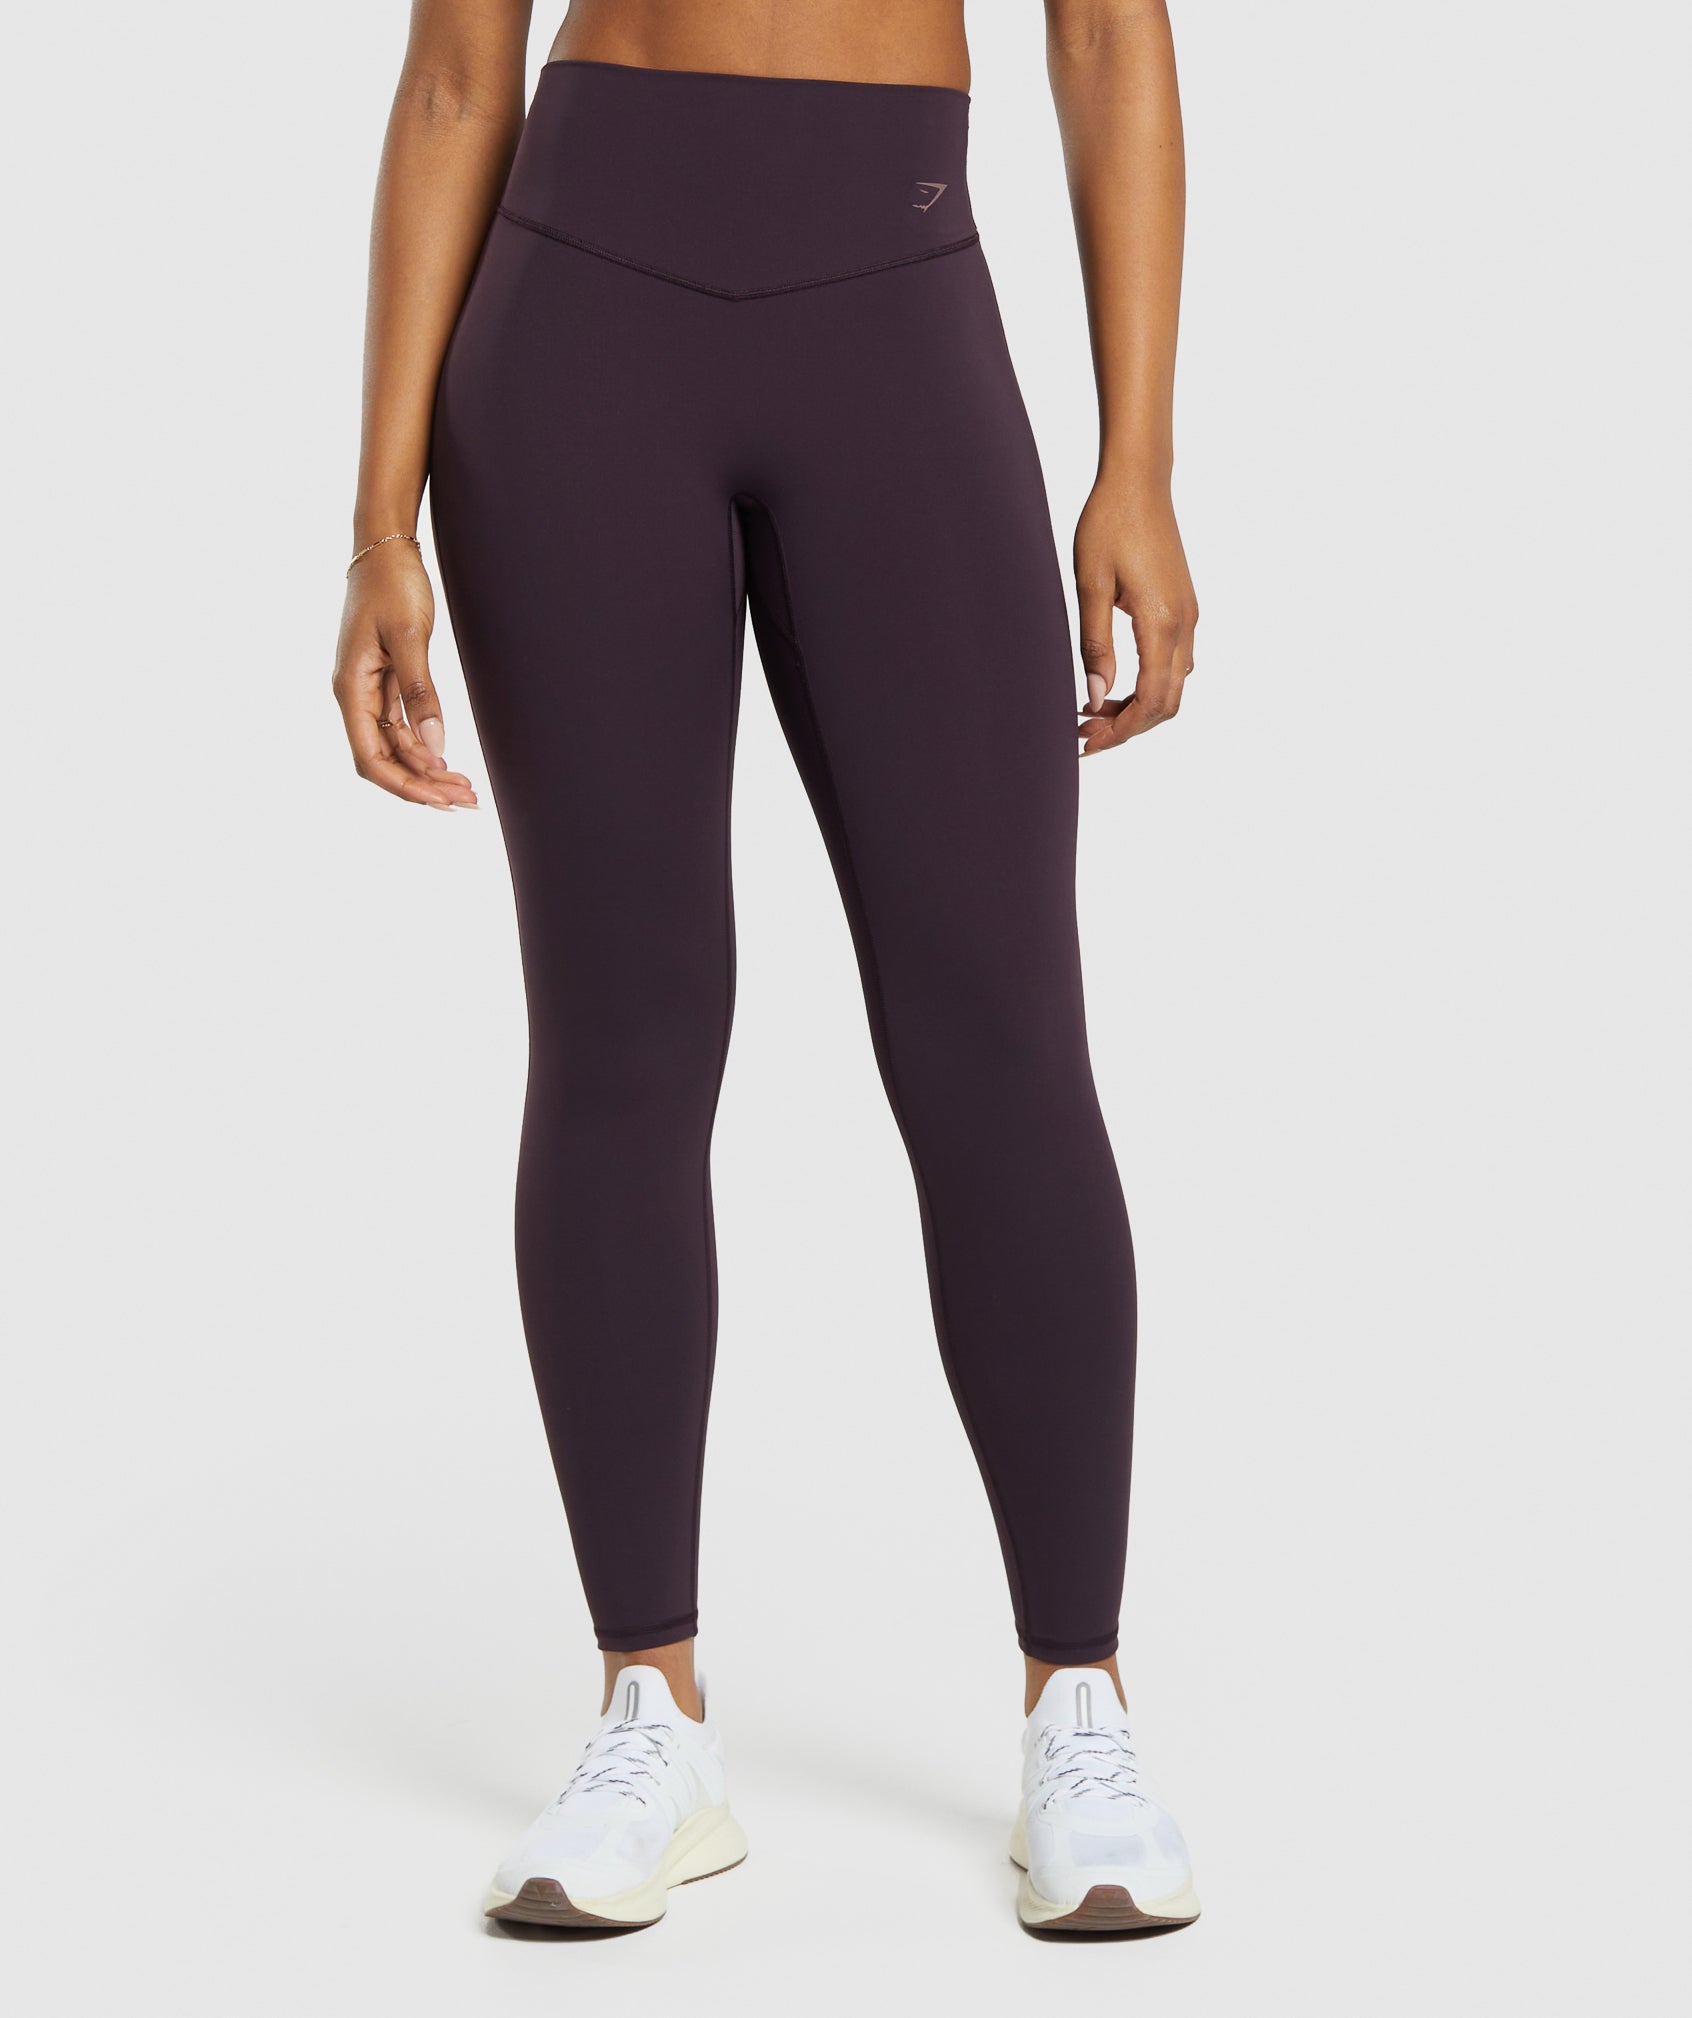 Dreamtale Women Clothing Contrast Mesh Yoga Legging Fitness Ladies Yoga  Pants Sports Running Workout Pants Dry